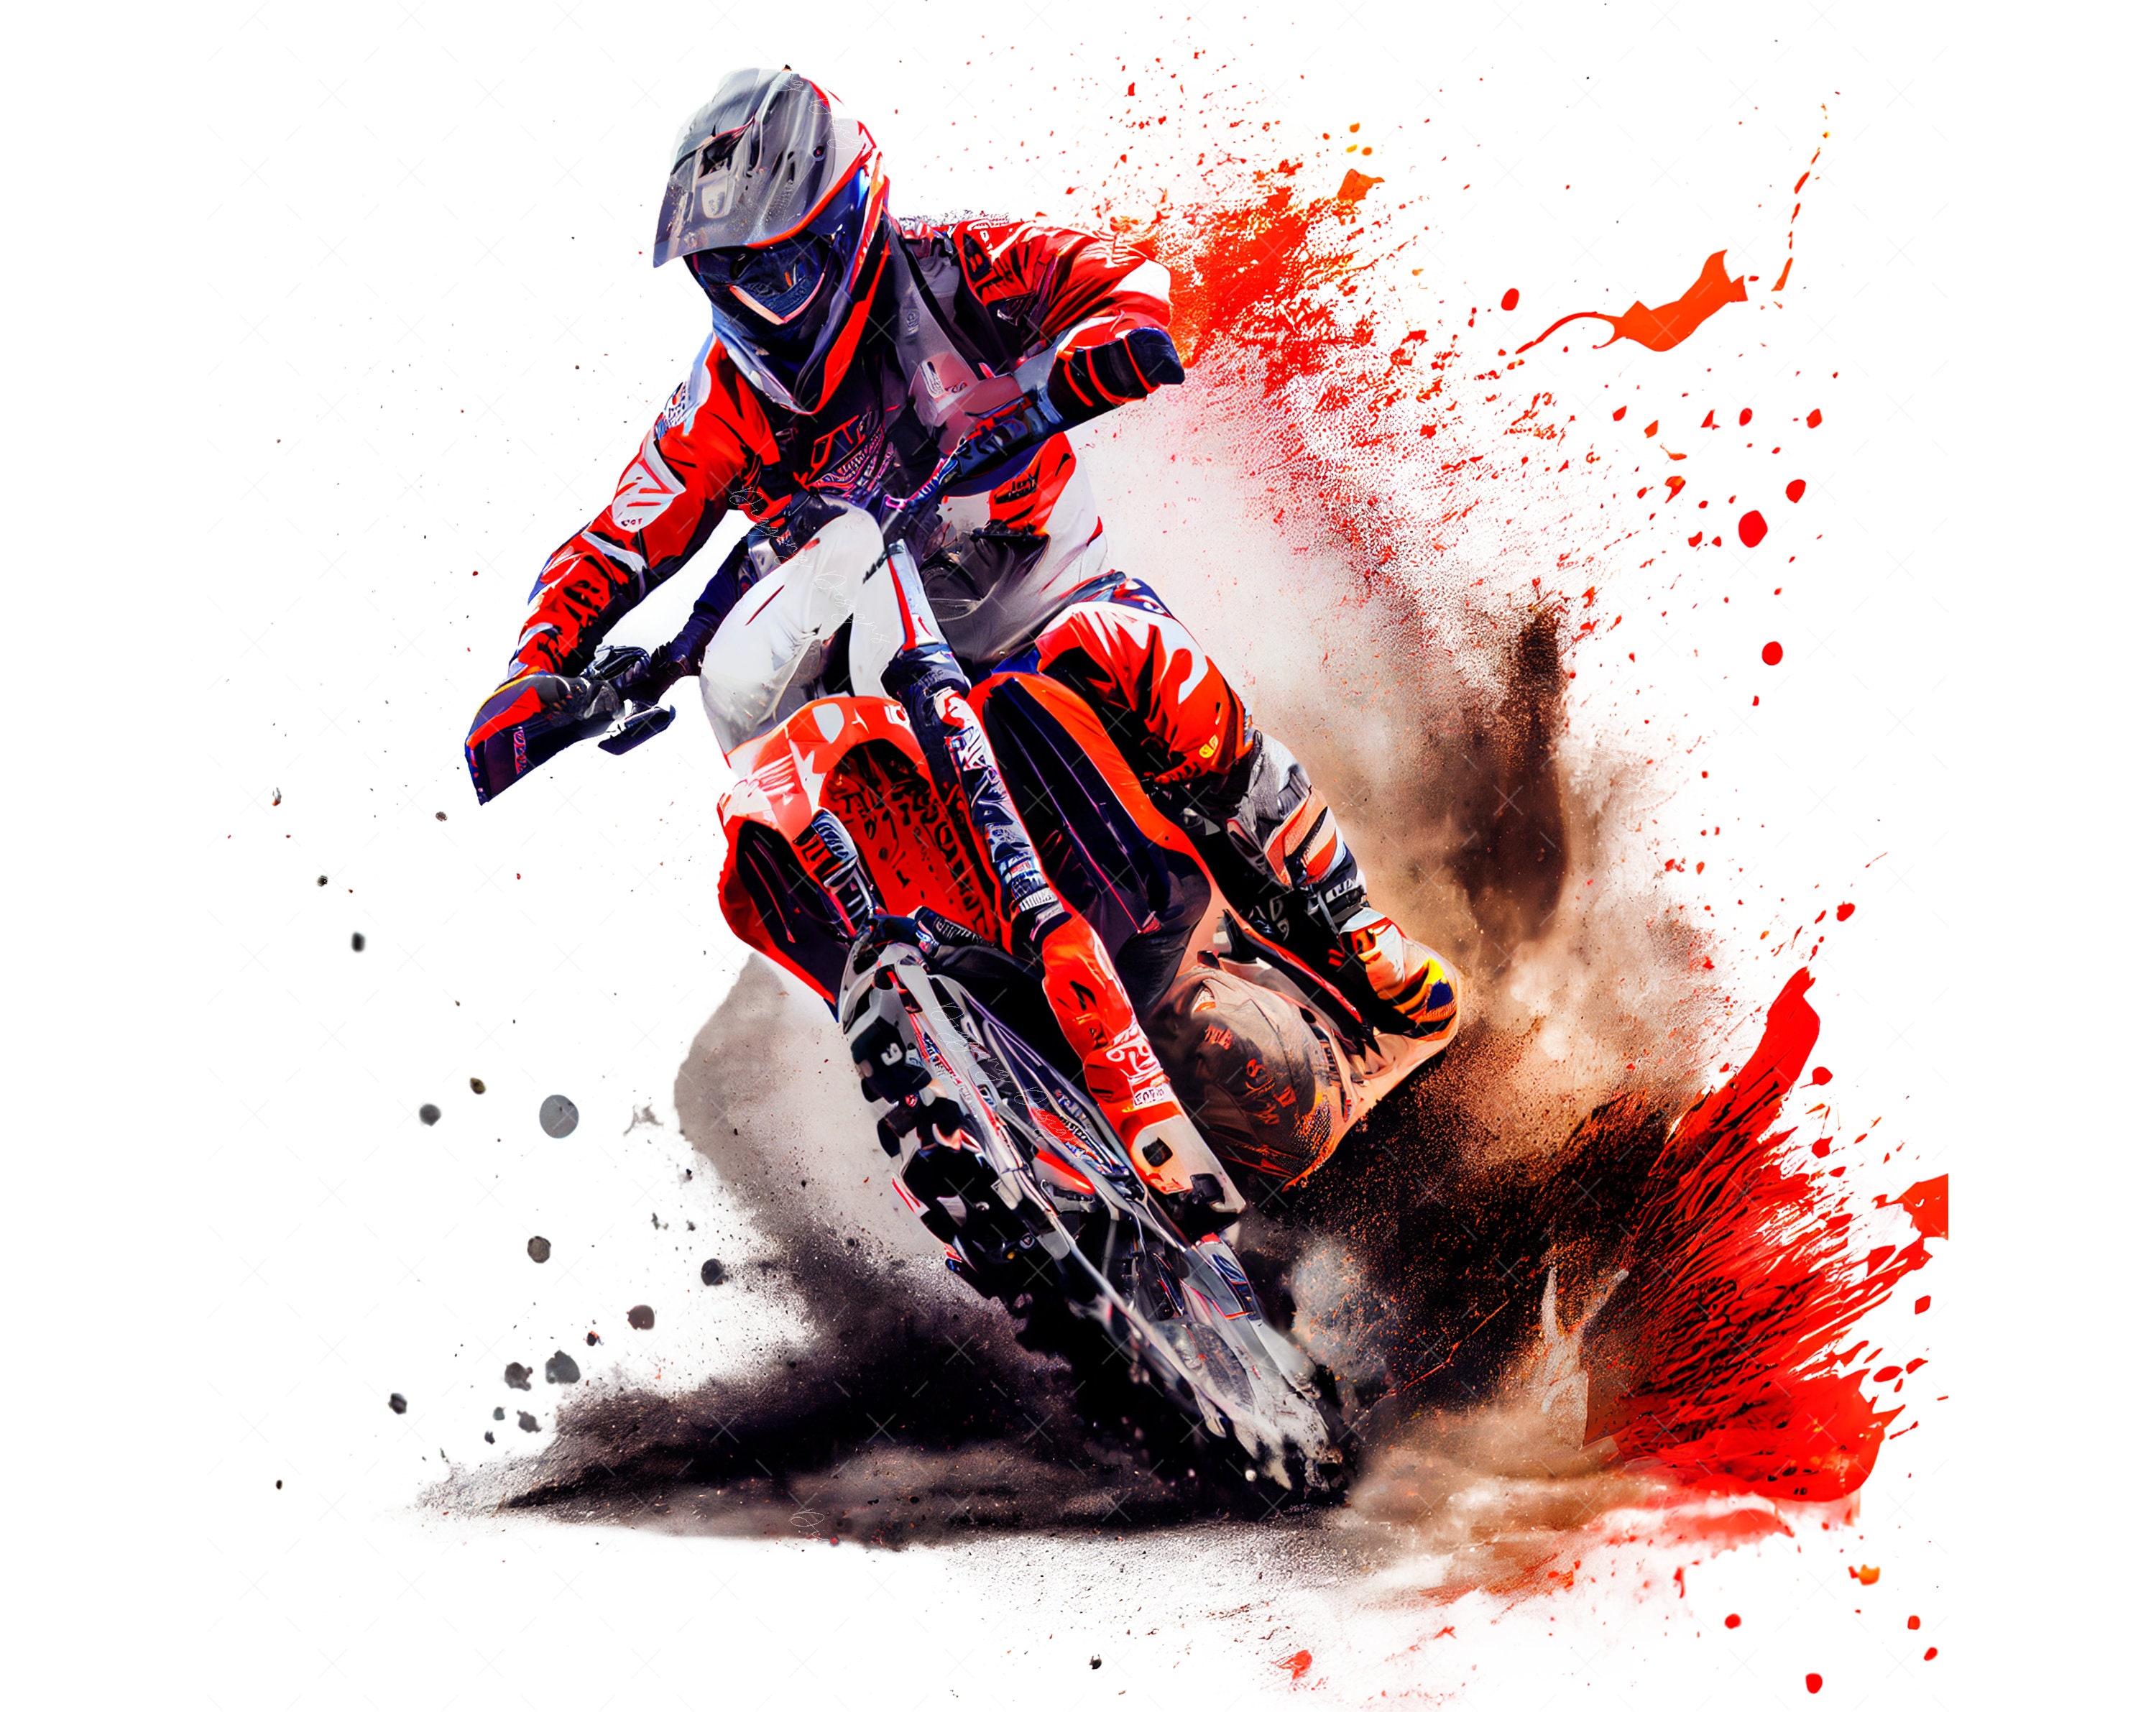 Dherbey Moto - Site Marchand : Leve moto MX art orange